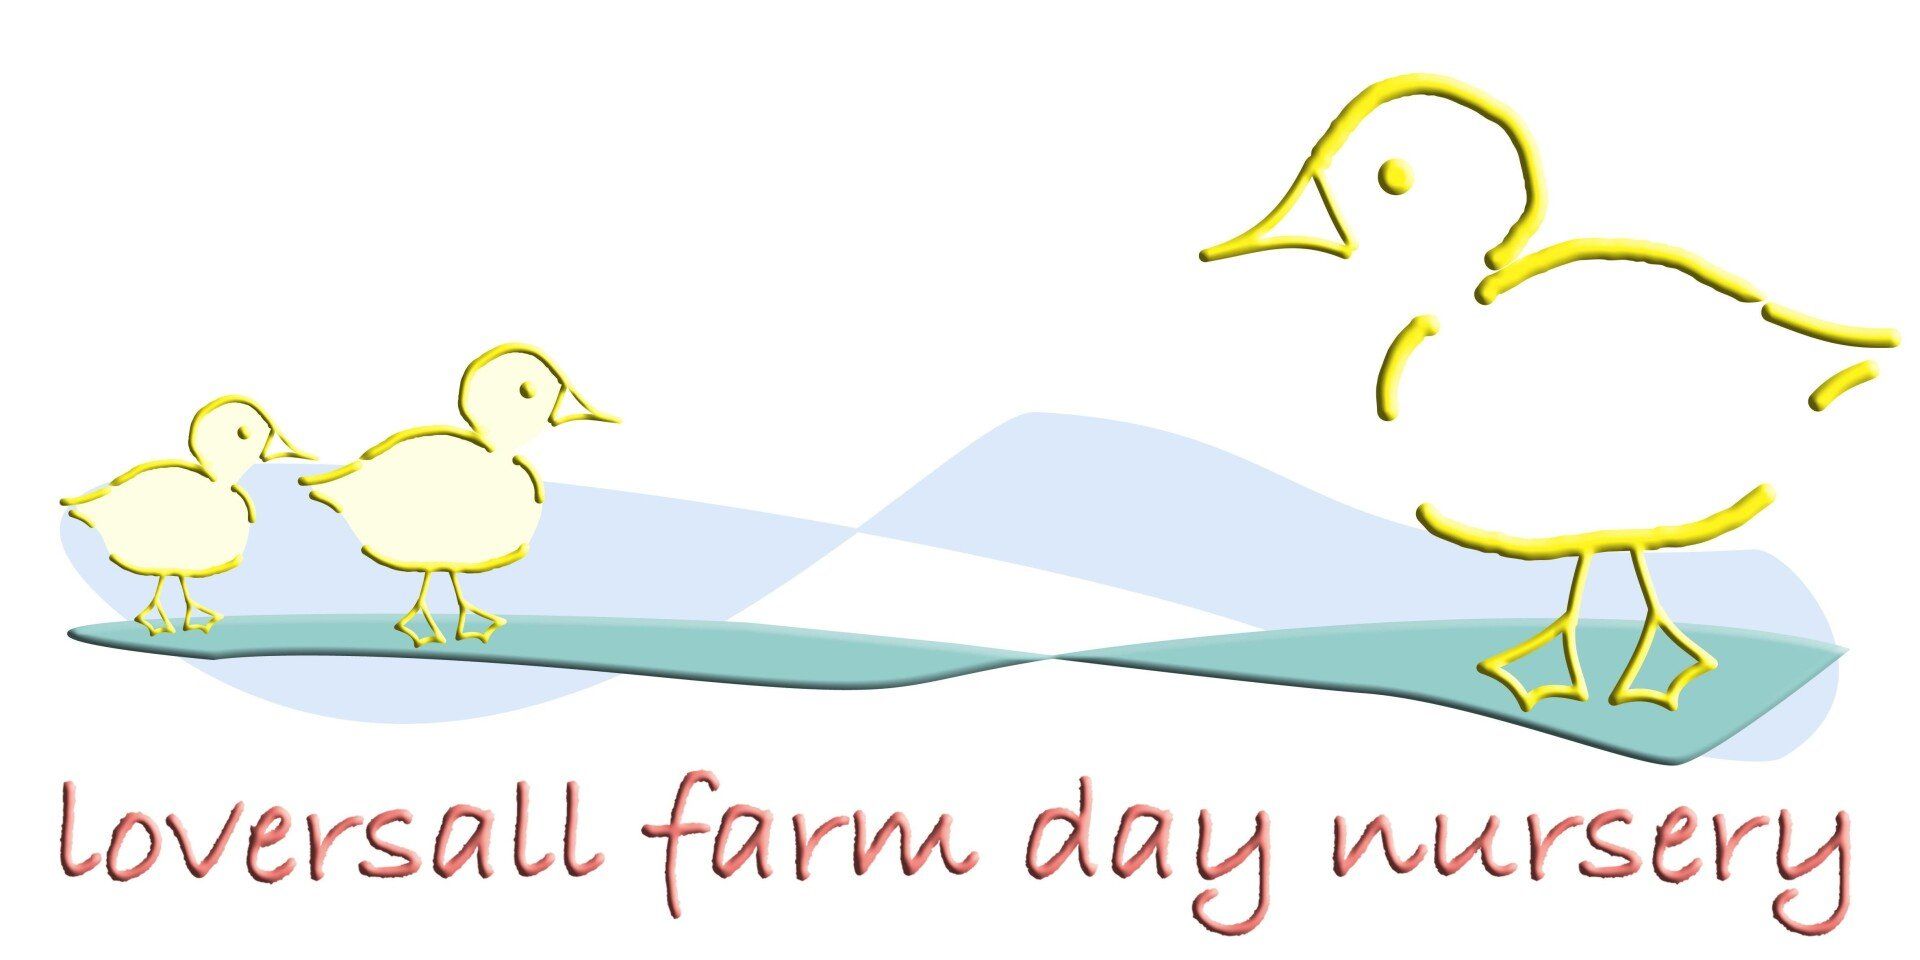 Loversall Farm Day Nursery Logo - Home